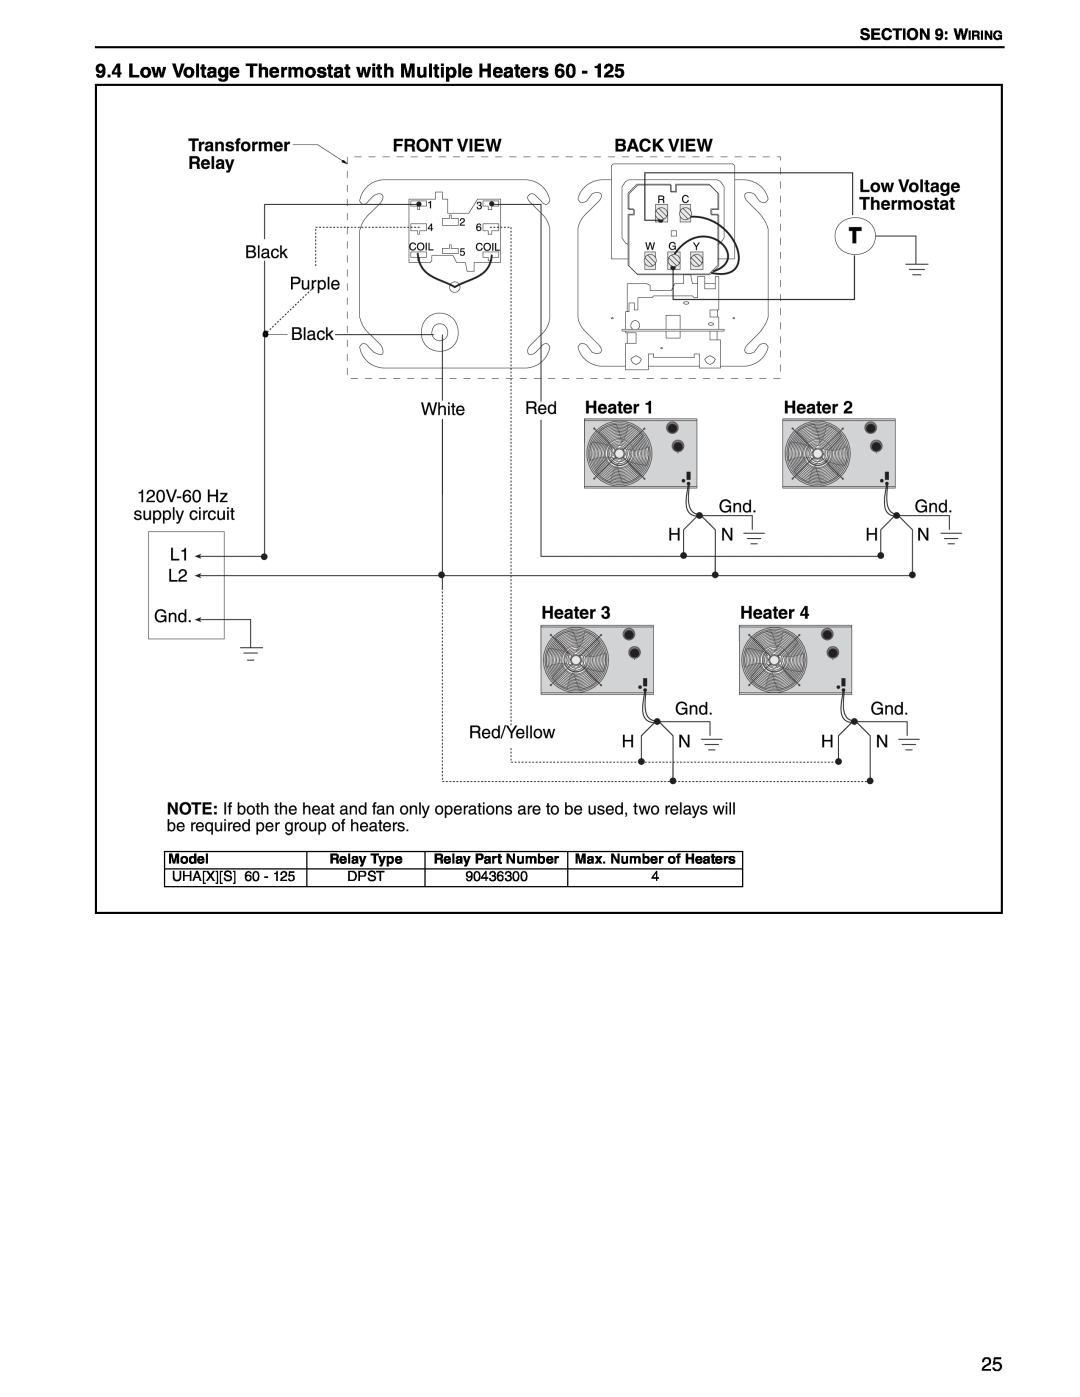 Roberts Gorden 100, 75, 125, 45 service manual UHAXS 60, Dpst, 90436300, Max. Number of Heaters 